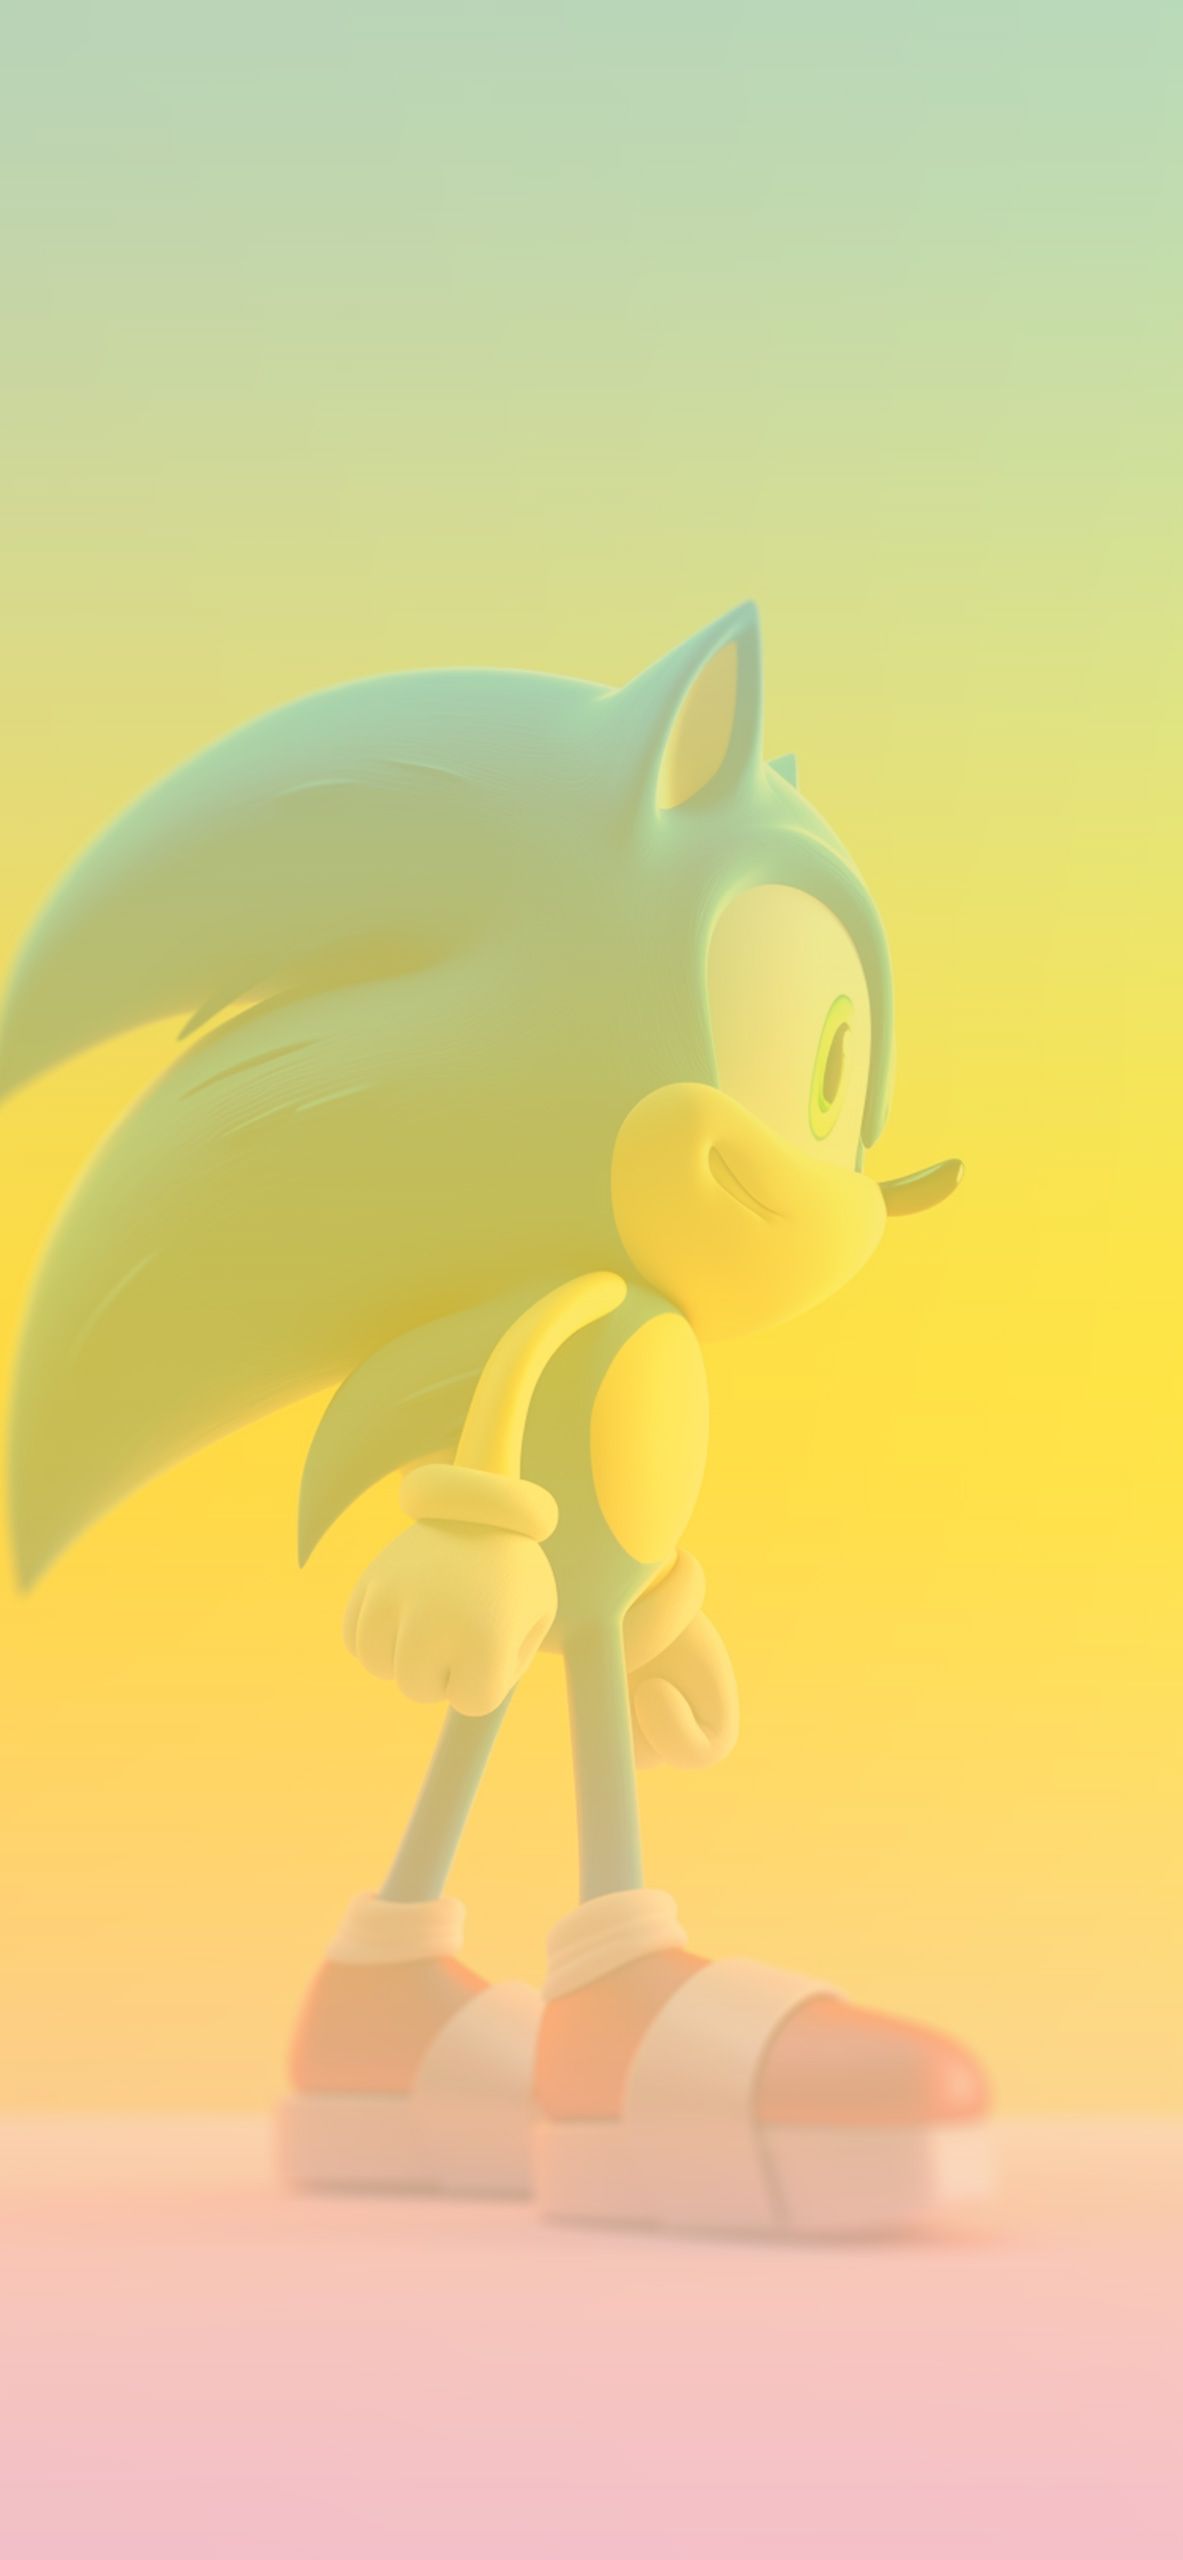 Sonic the Hedgehog Yellow Wallpaper Wallpaper iPhone